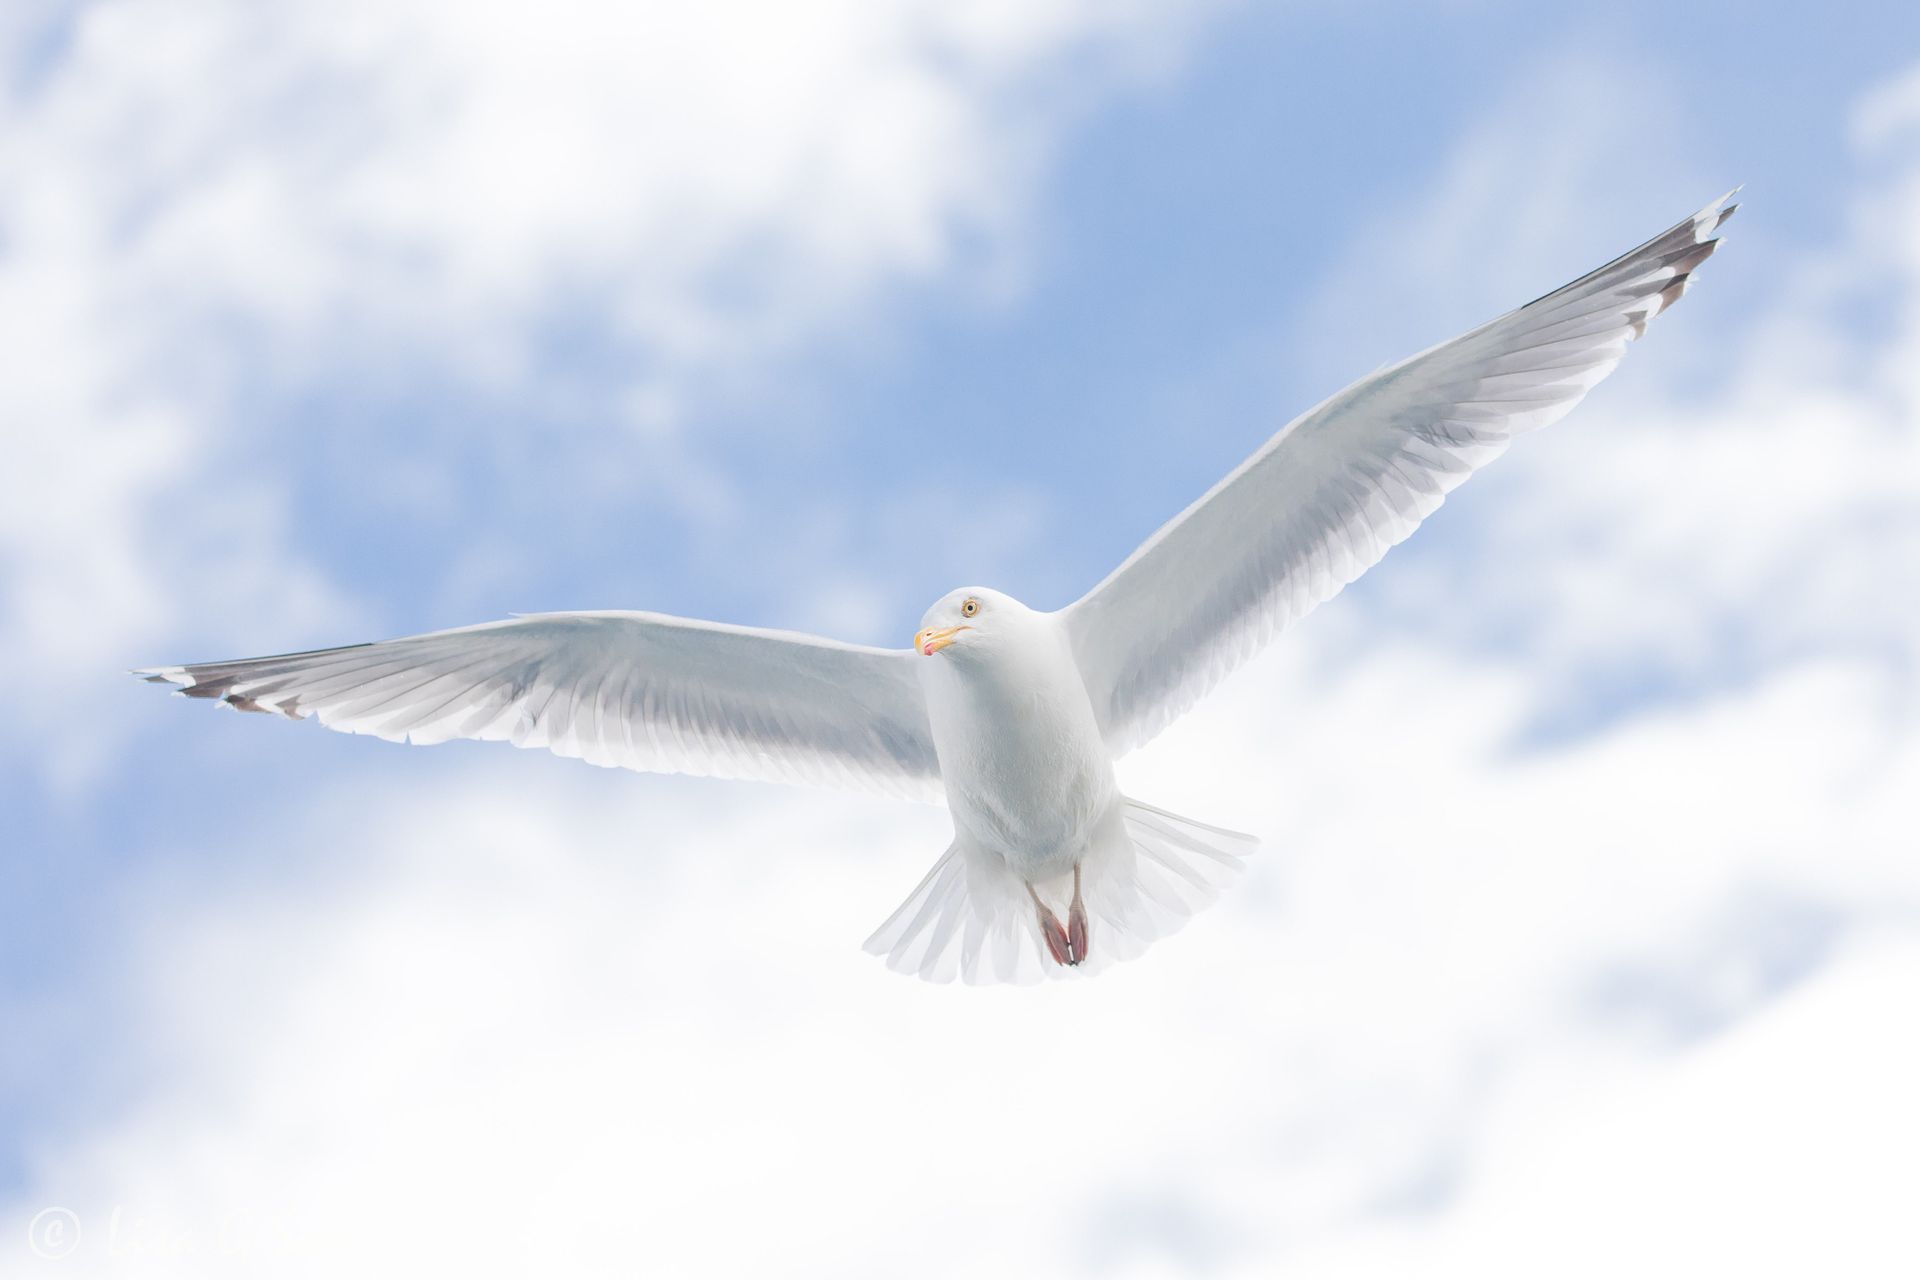 Herring Gull looking angelic flying overhead